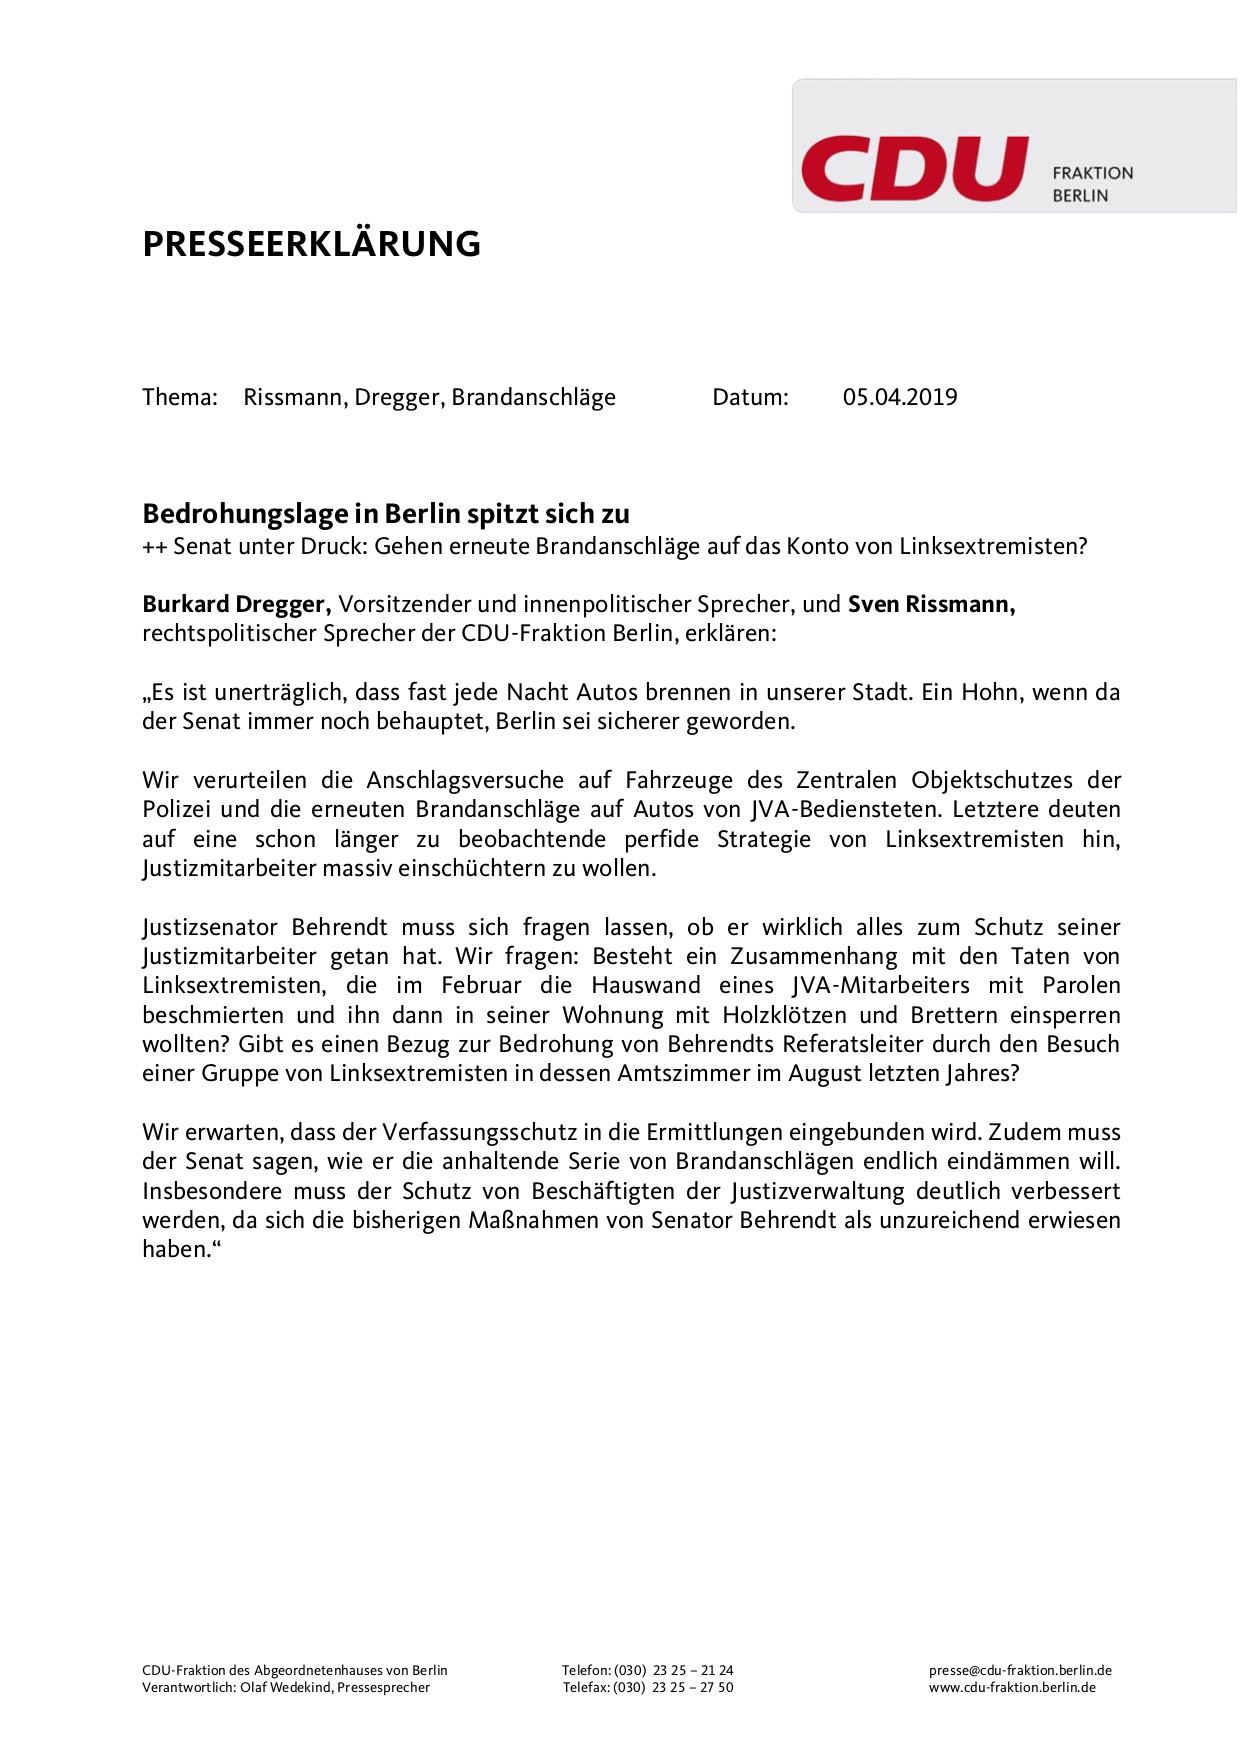 Burkard Dregger Mda Bedrohungslage In Berlin Spitzt Sich Zu